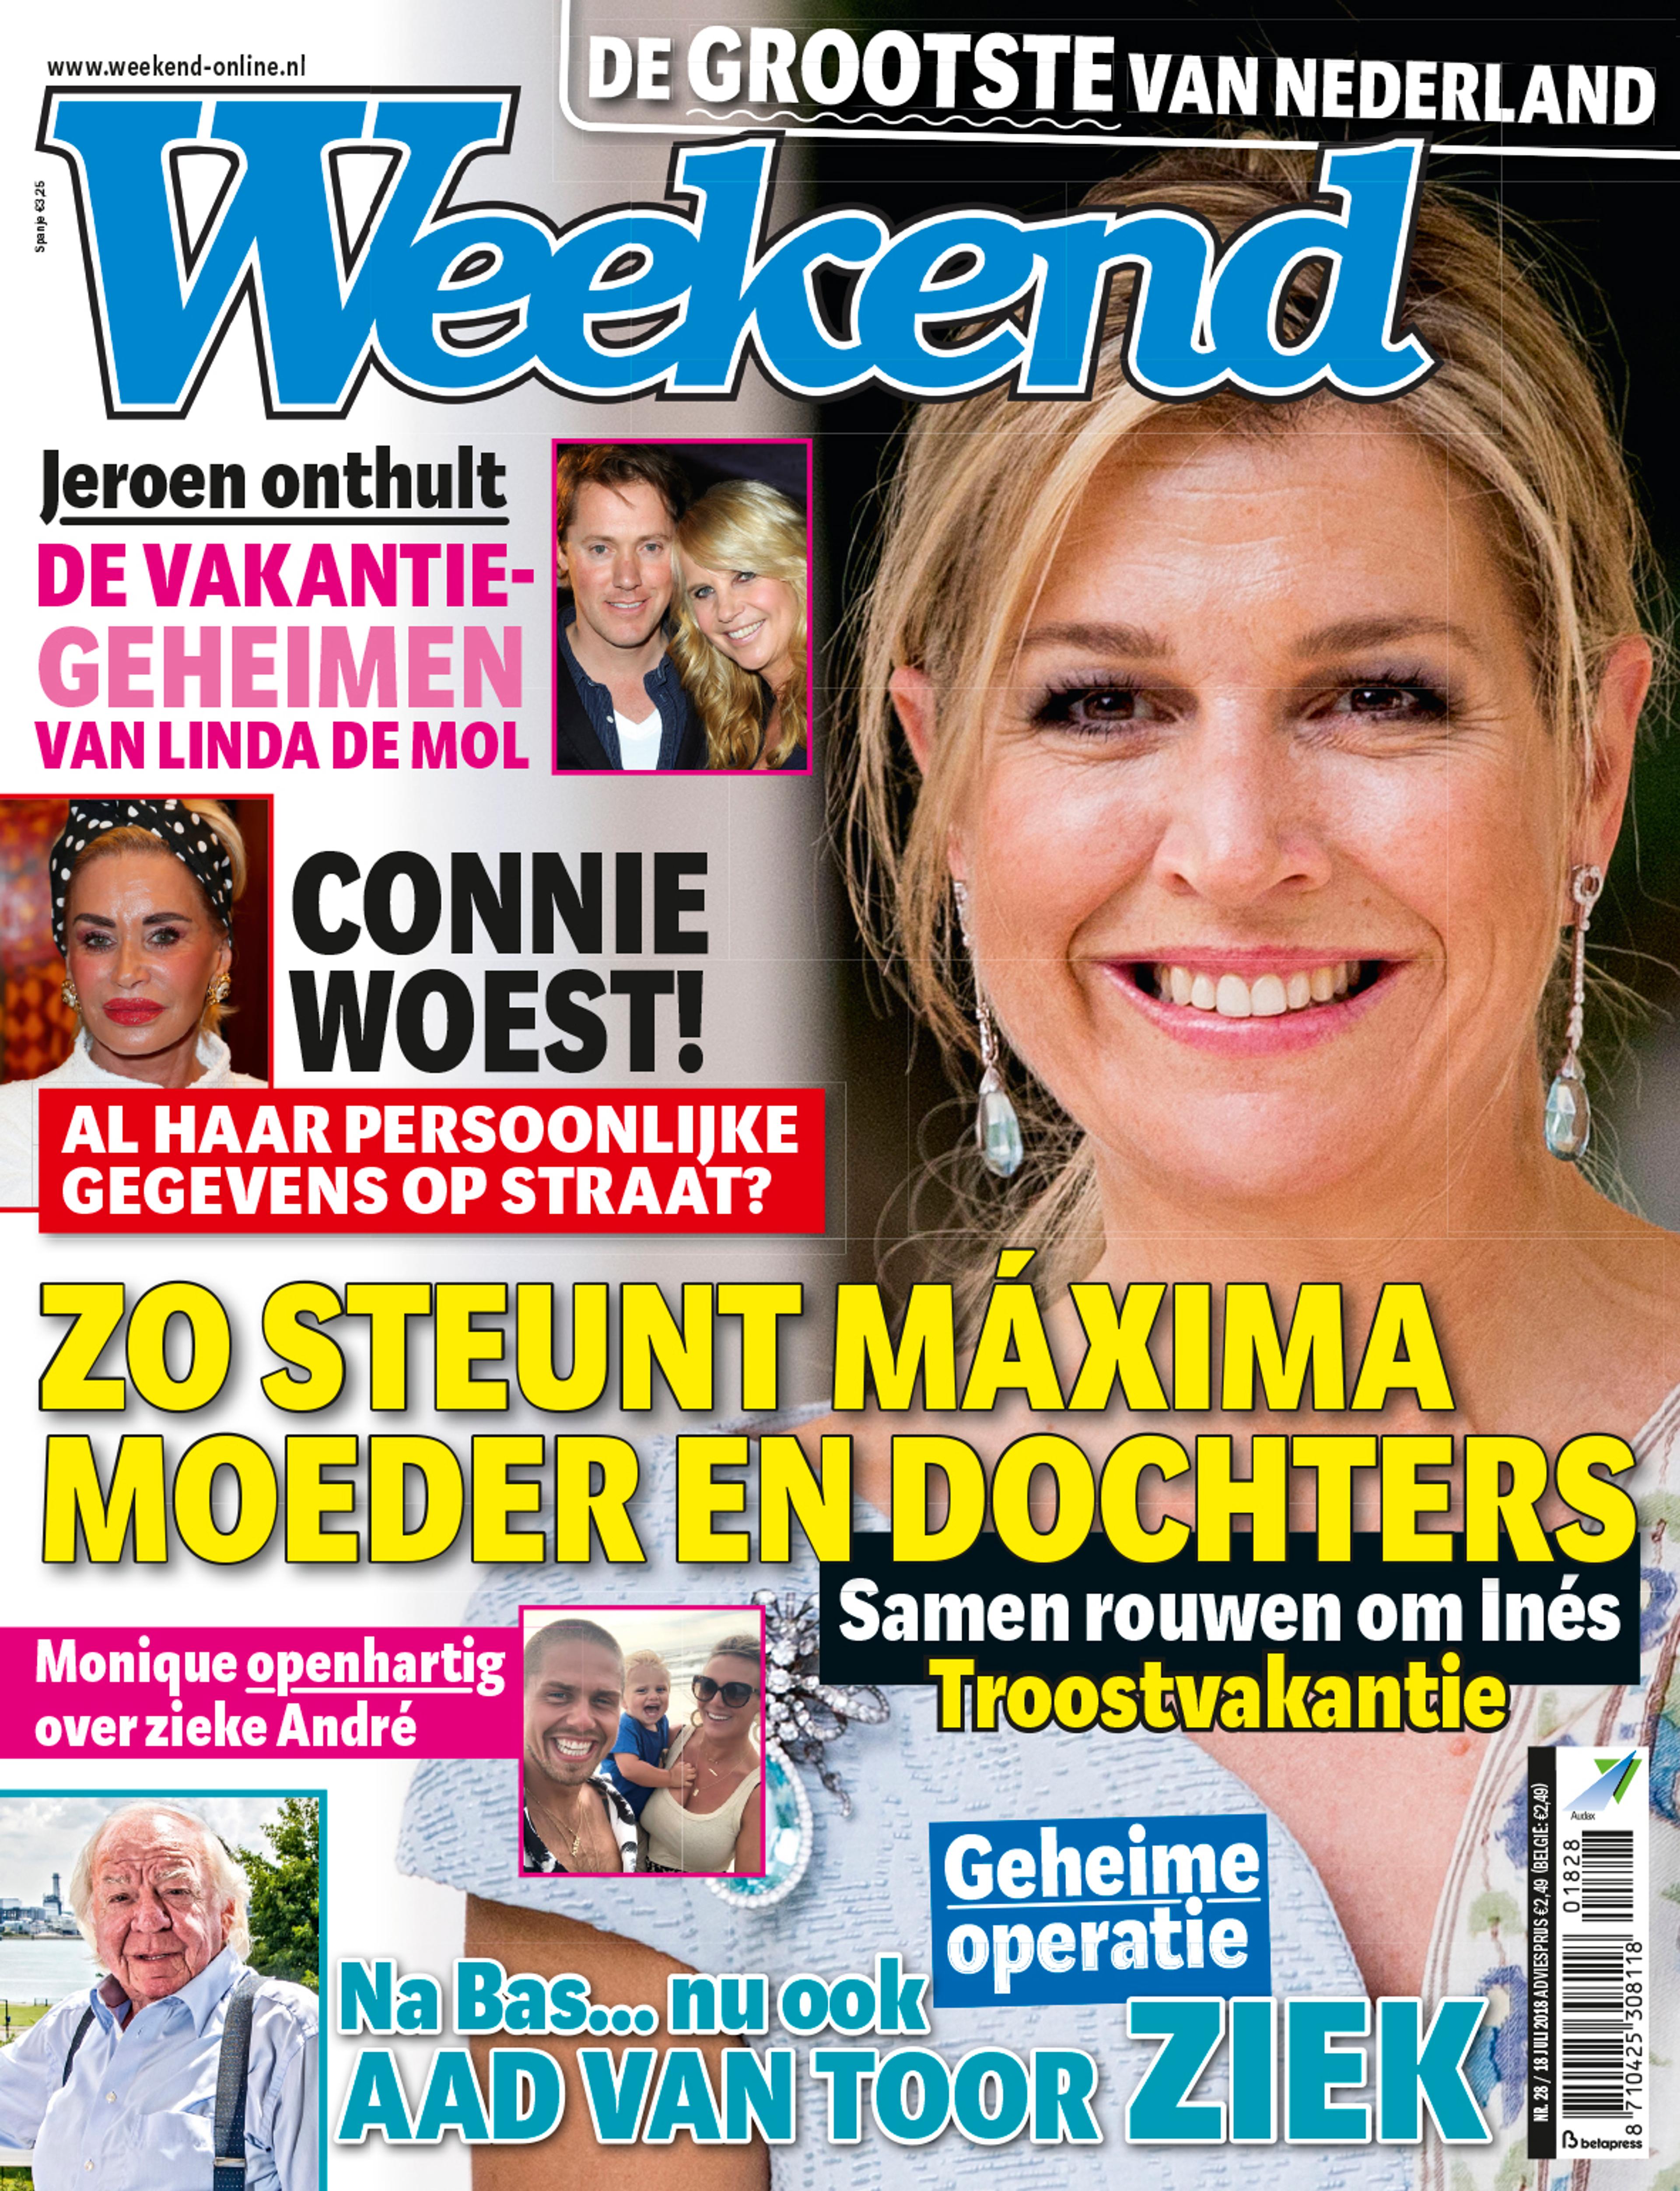 Weekblad Weekend kiest voor groter formaat